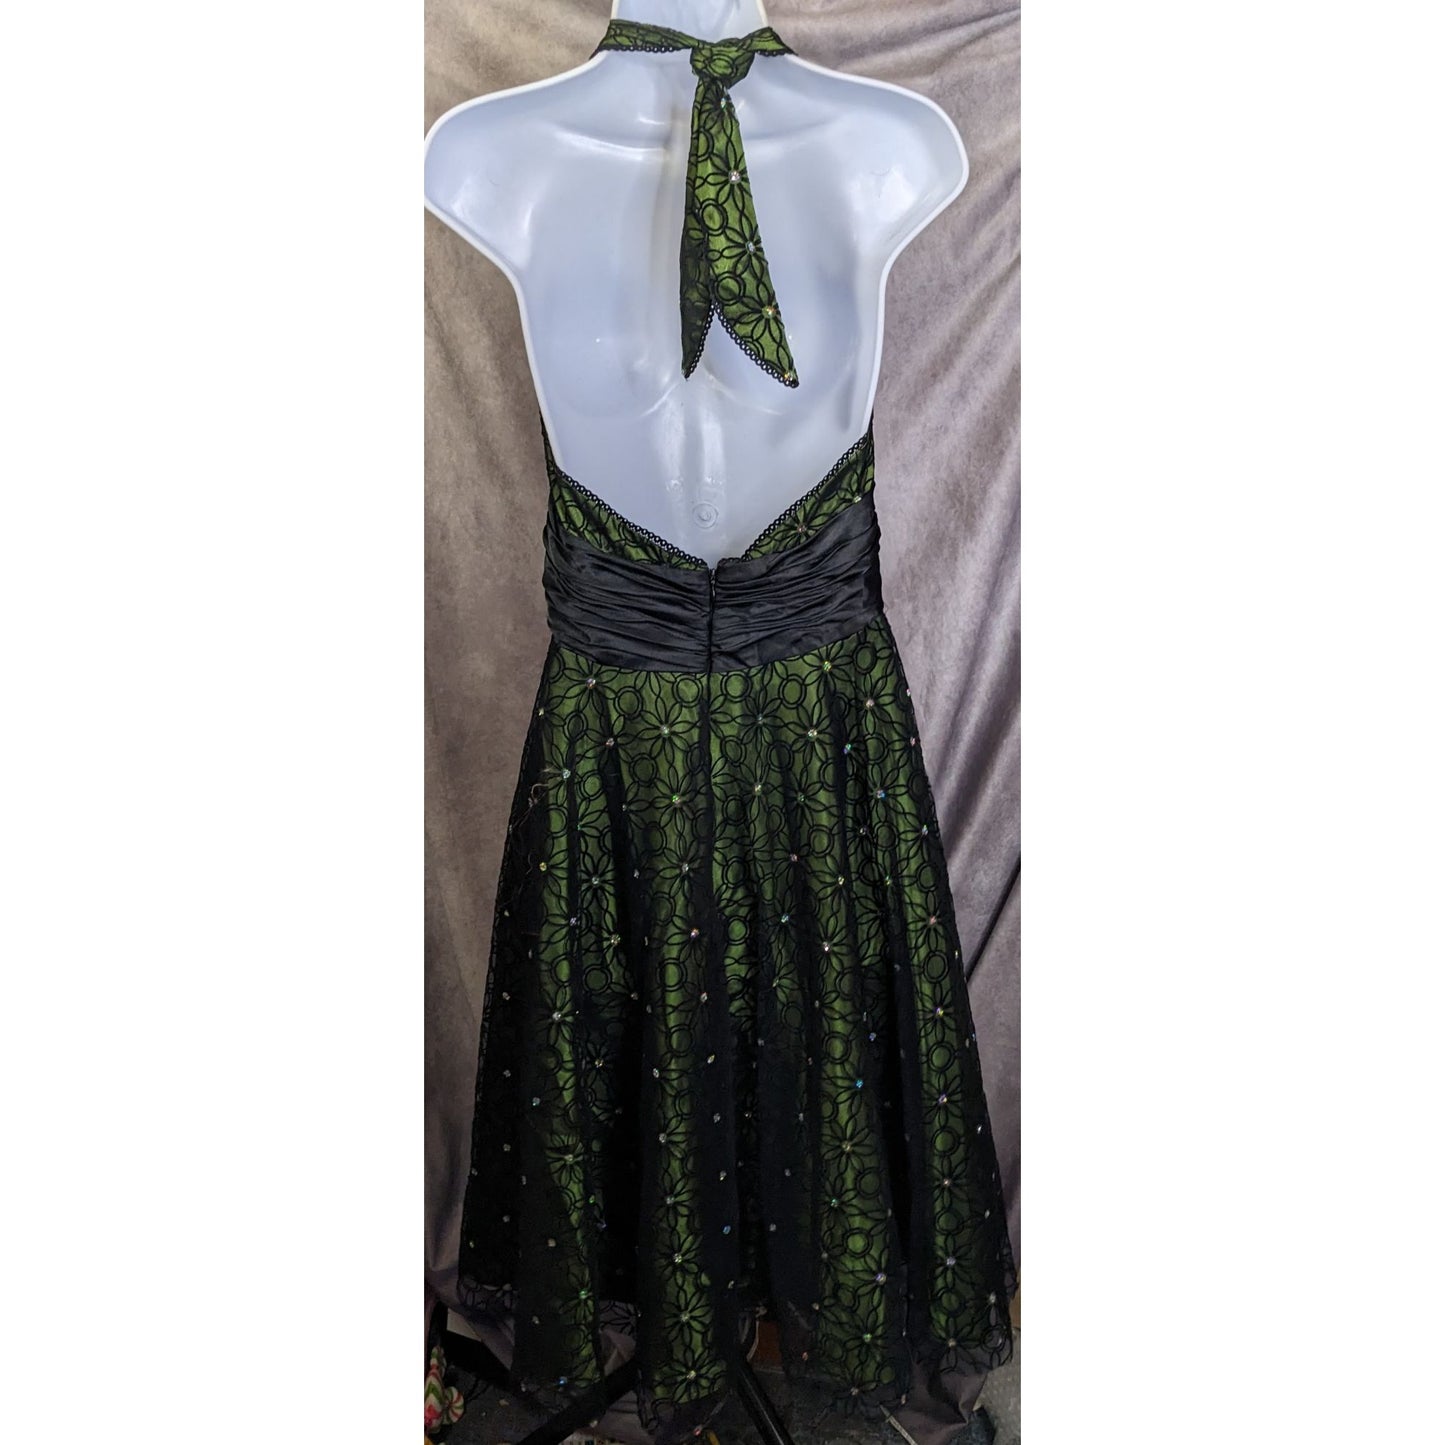 Vintage Adrianna Papell Boutique Green Floral Halter Dress